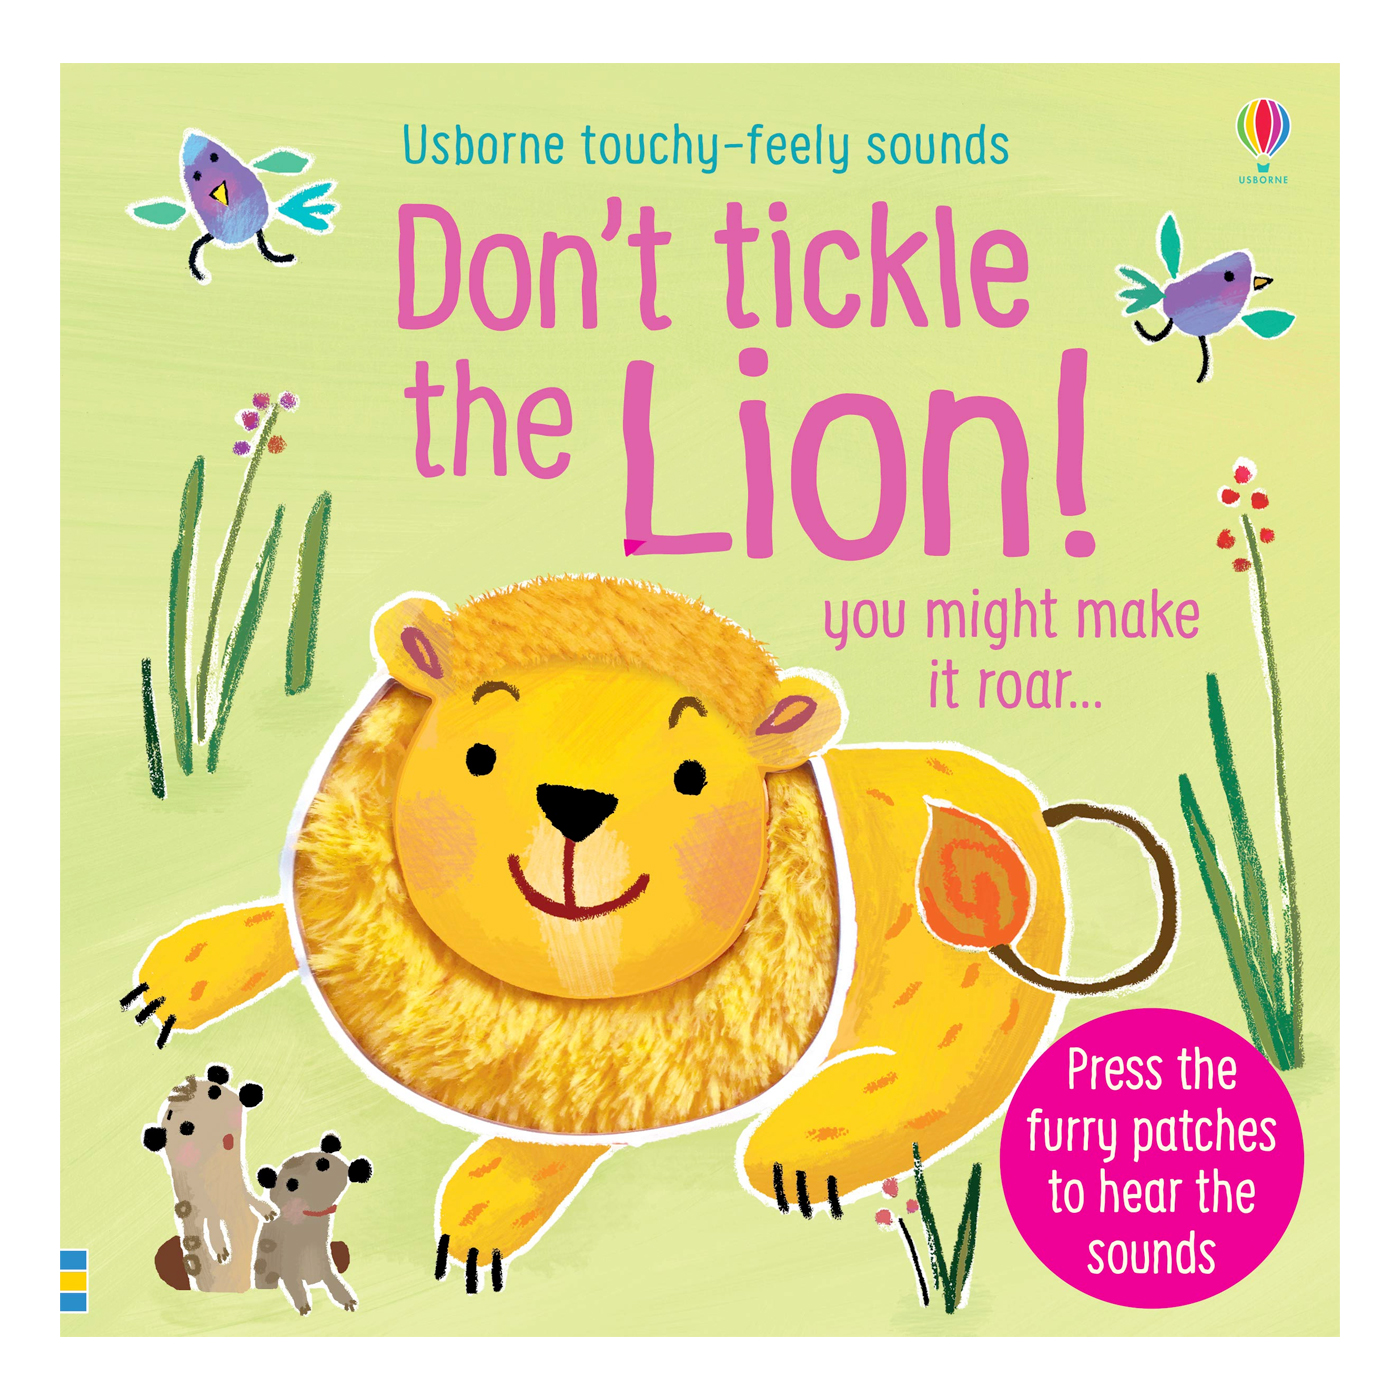  Don't tickle the Lion!